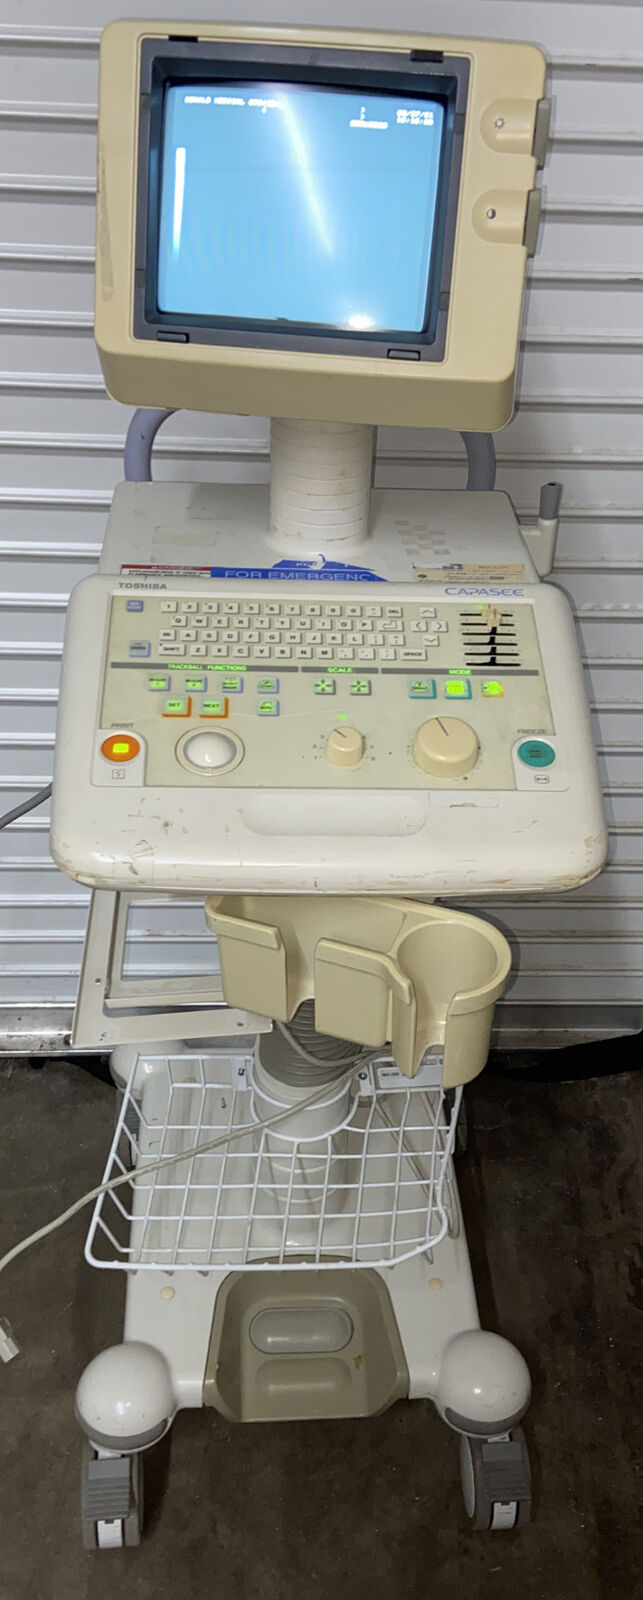 Toshiba Capasee Medical Diagnostic Ultrasound System Version 2.12 ￼ DIAGNOSTIC ULTRASOUND MACHINES FOR SALE